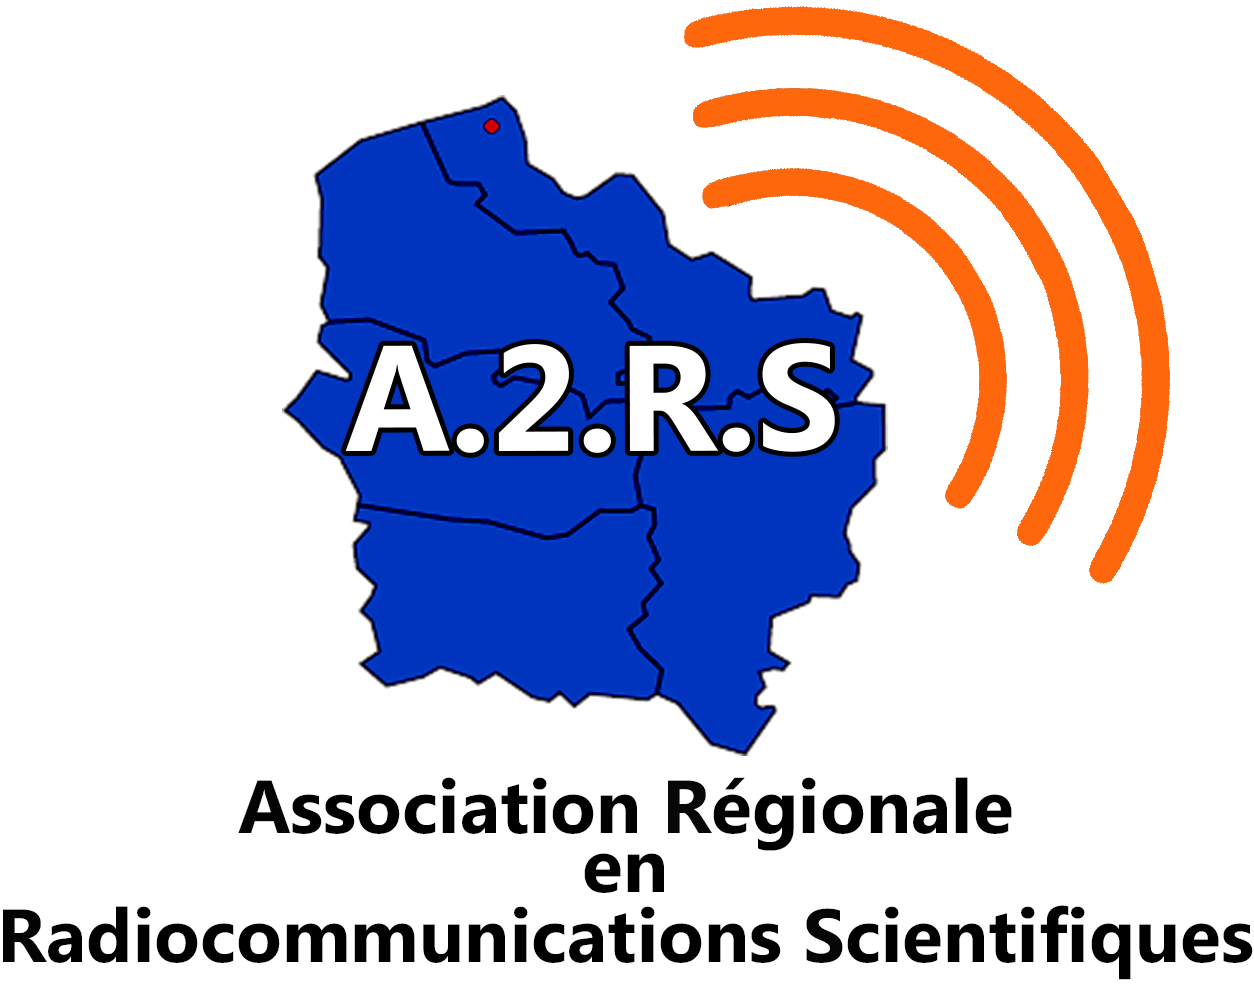 ASSOCIATION REGIONALE EN RADIOCOMMUNICATIONS SCIENTIFIQUES